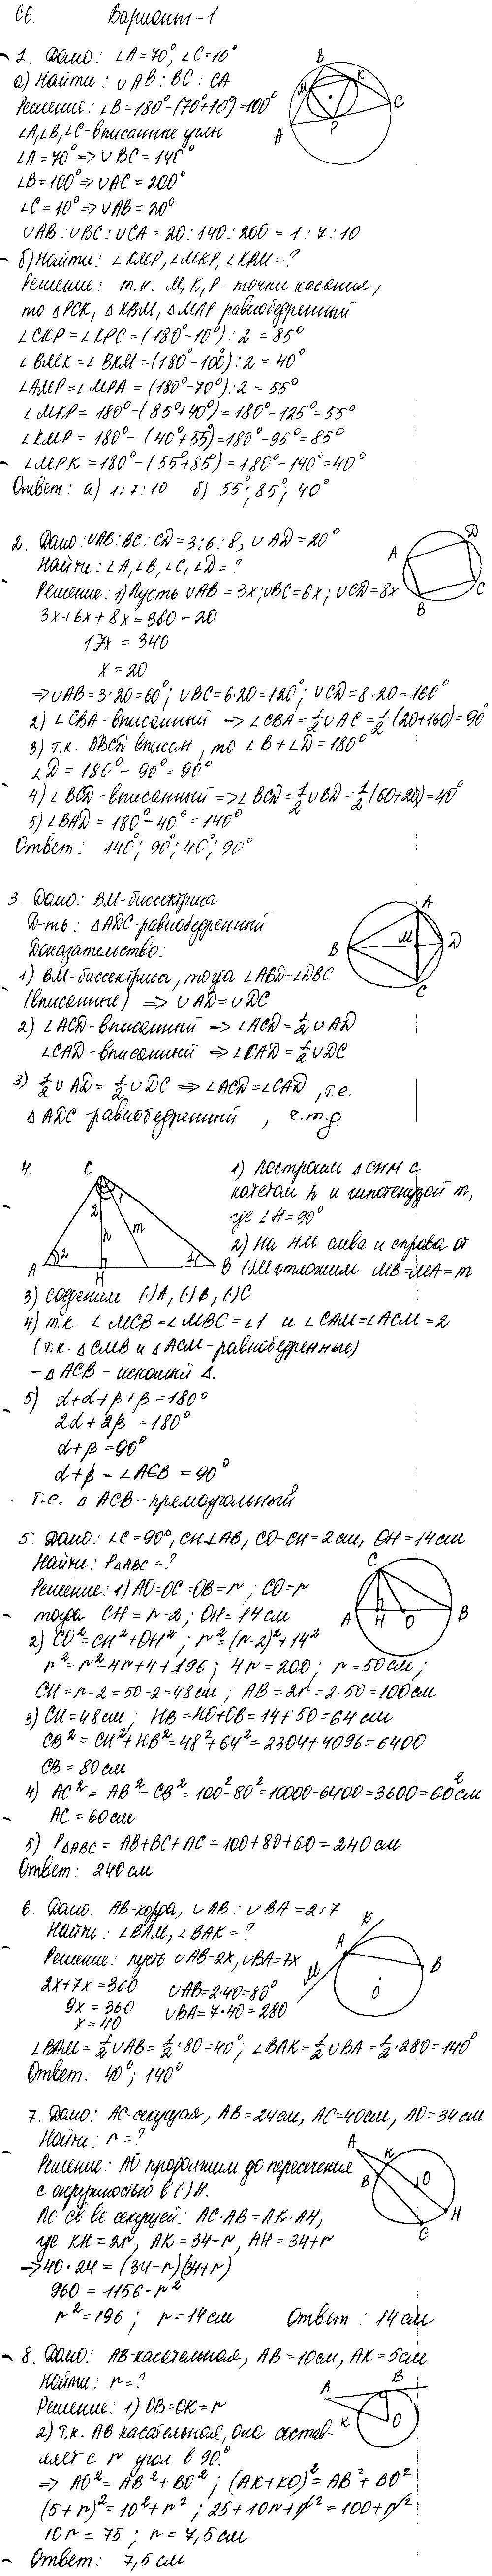 ГДЗ Геометрия 9 класс - Вариант 1